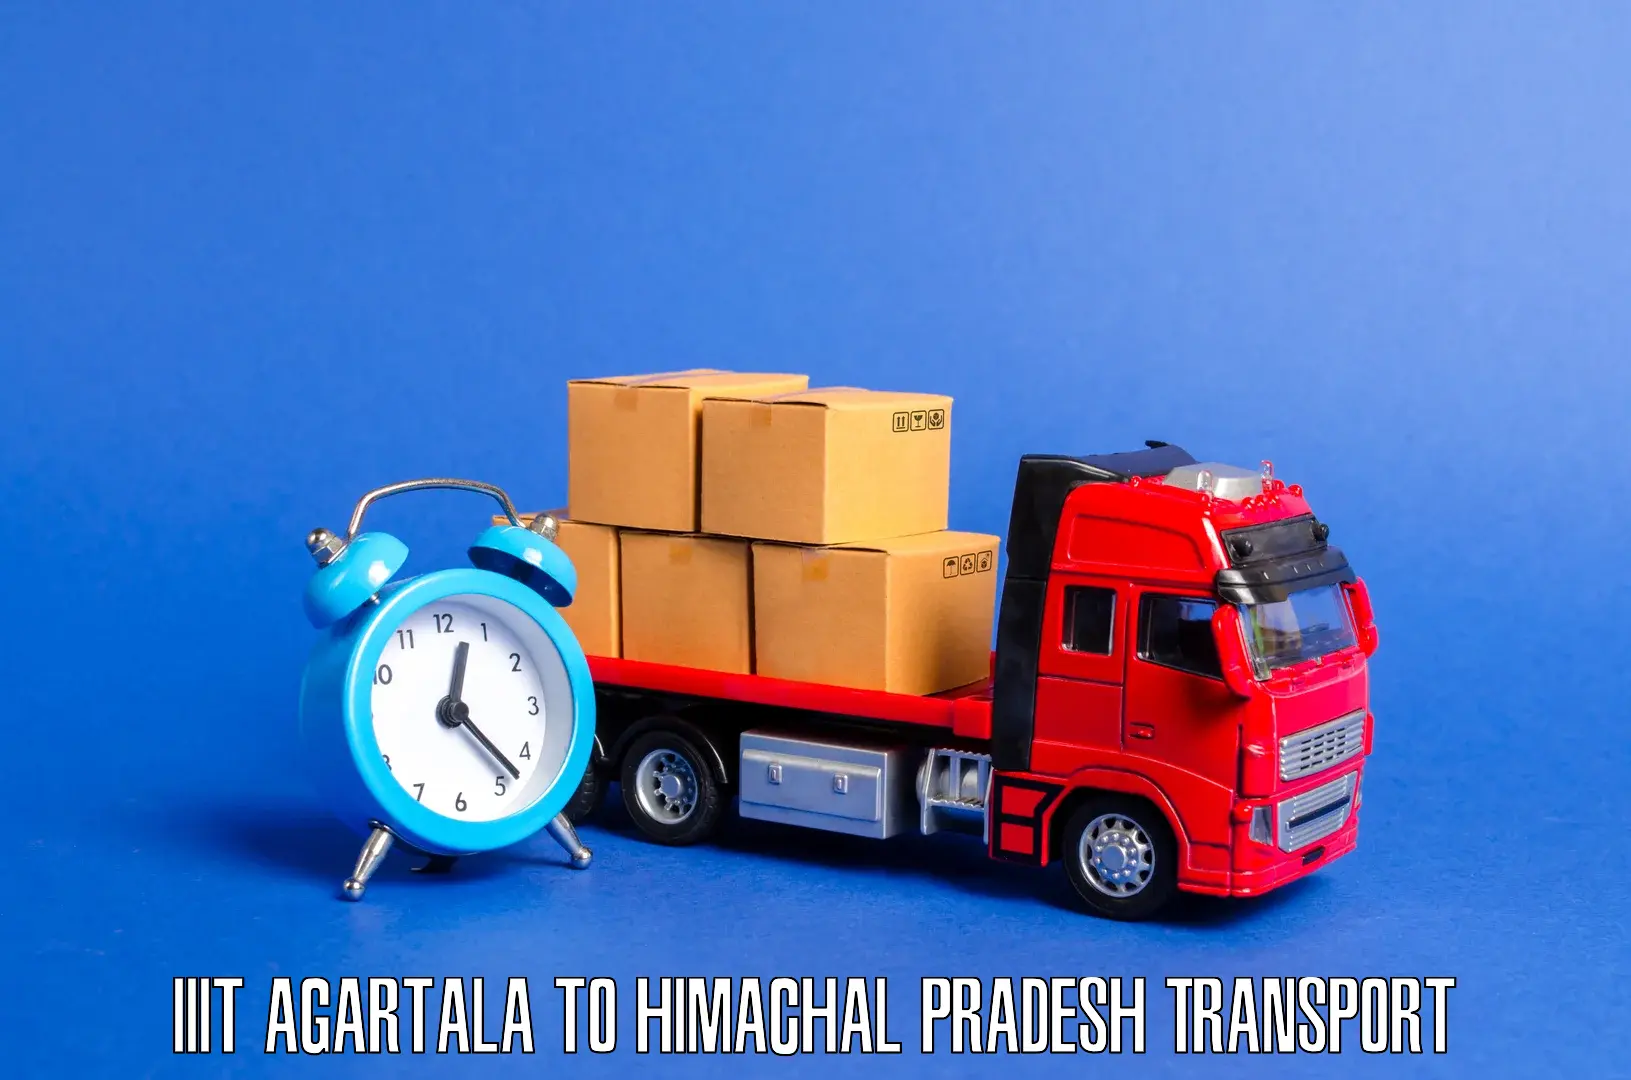 Bike transfer IIIT Agartala to Himachal Pradesh